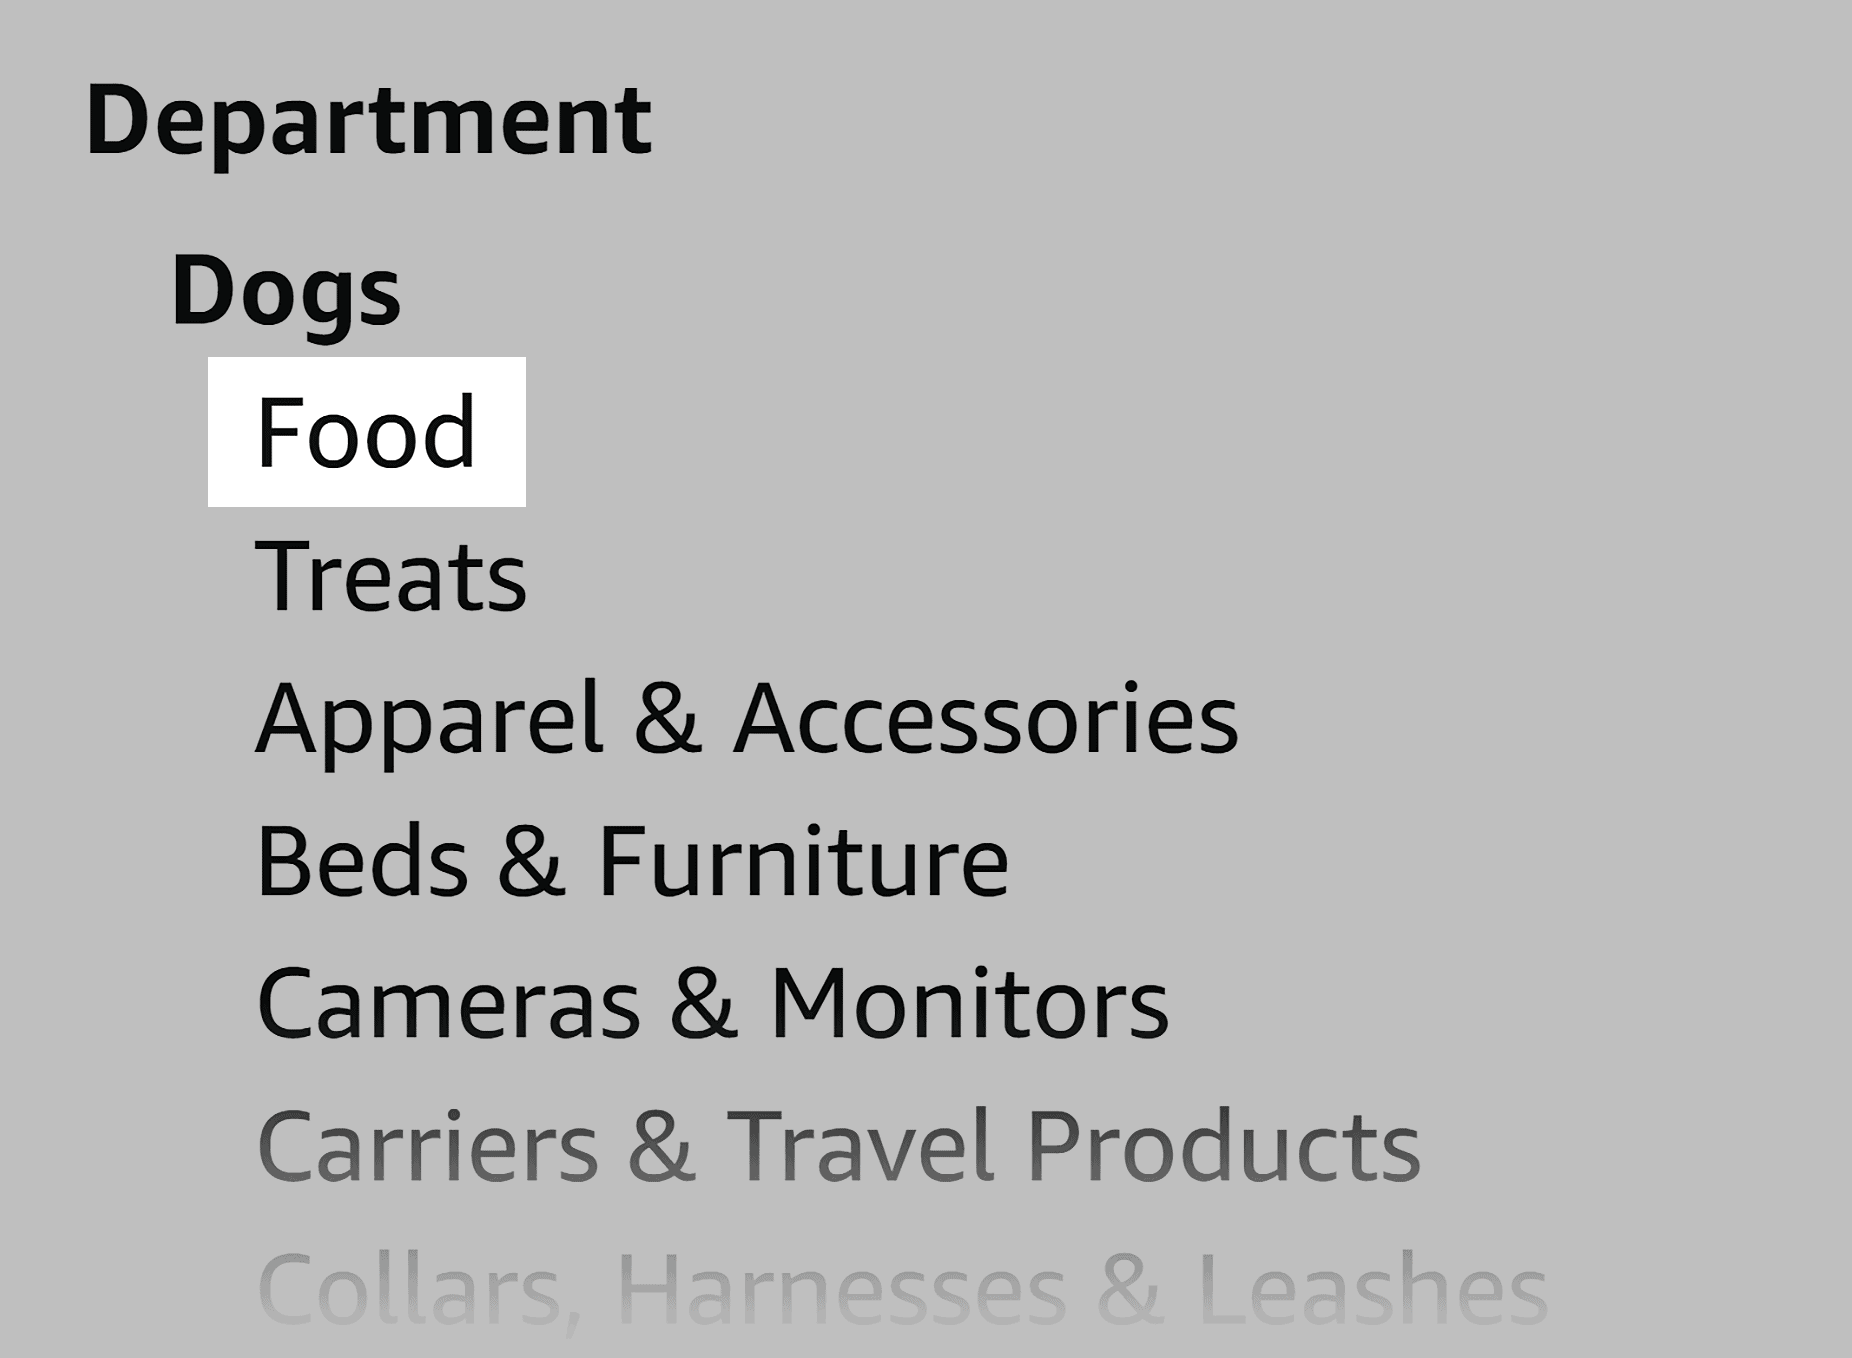 Amazon – Dogs department